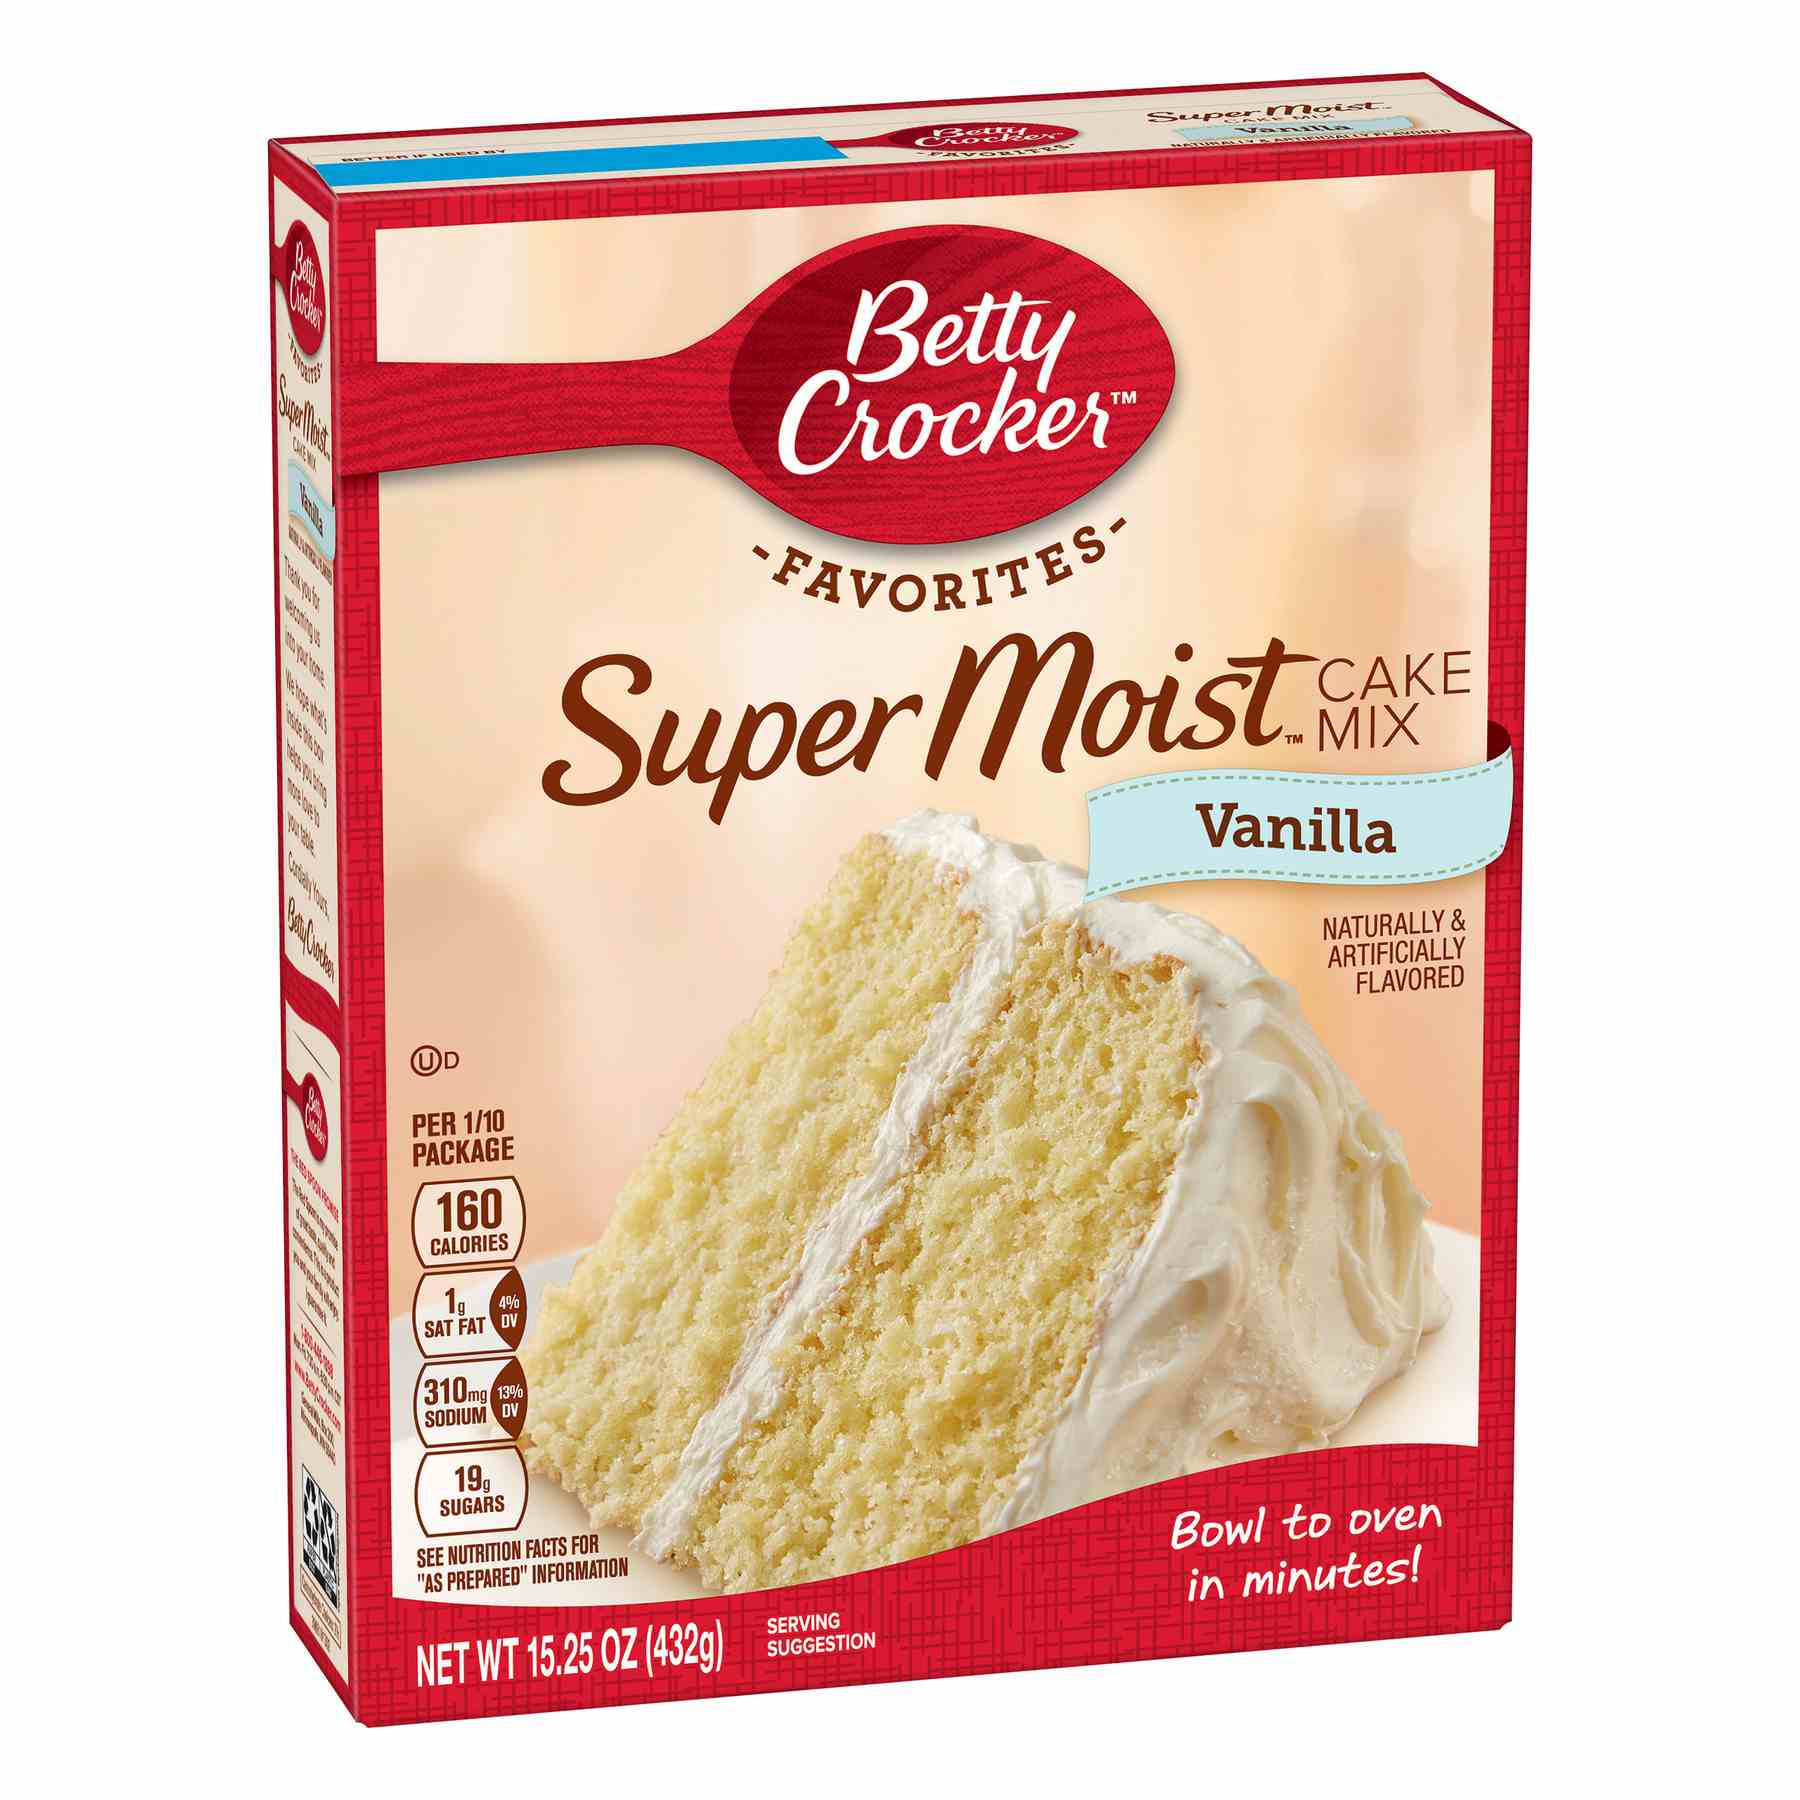 Super Moist Vanilla Cake Recipe
 The 9 Best Boxed Cake Mixes of 2020